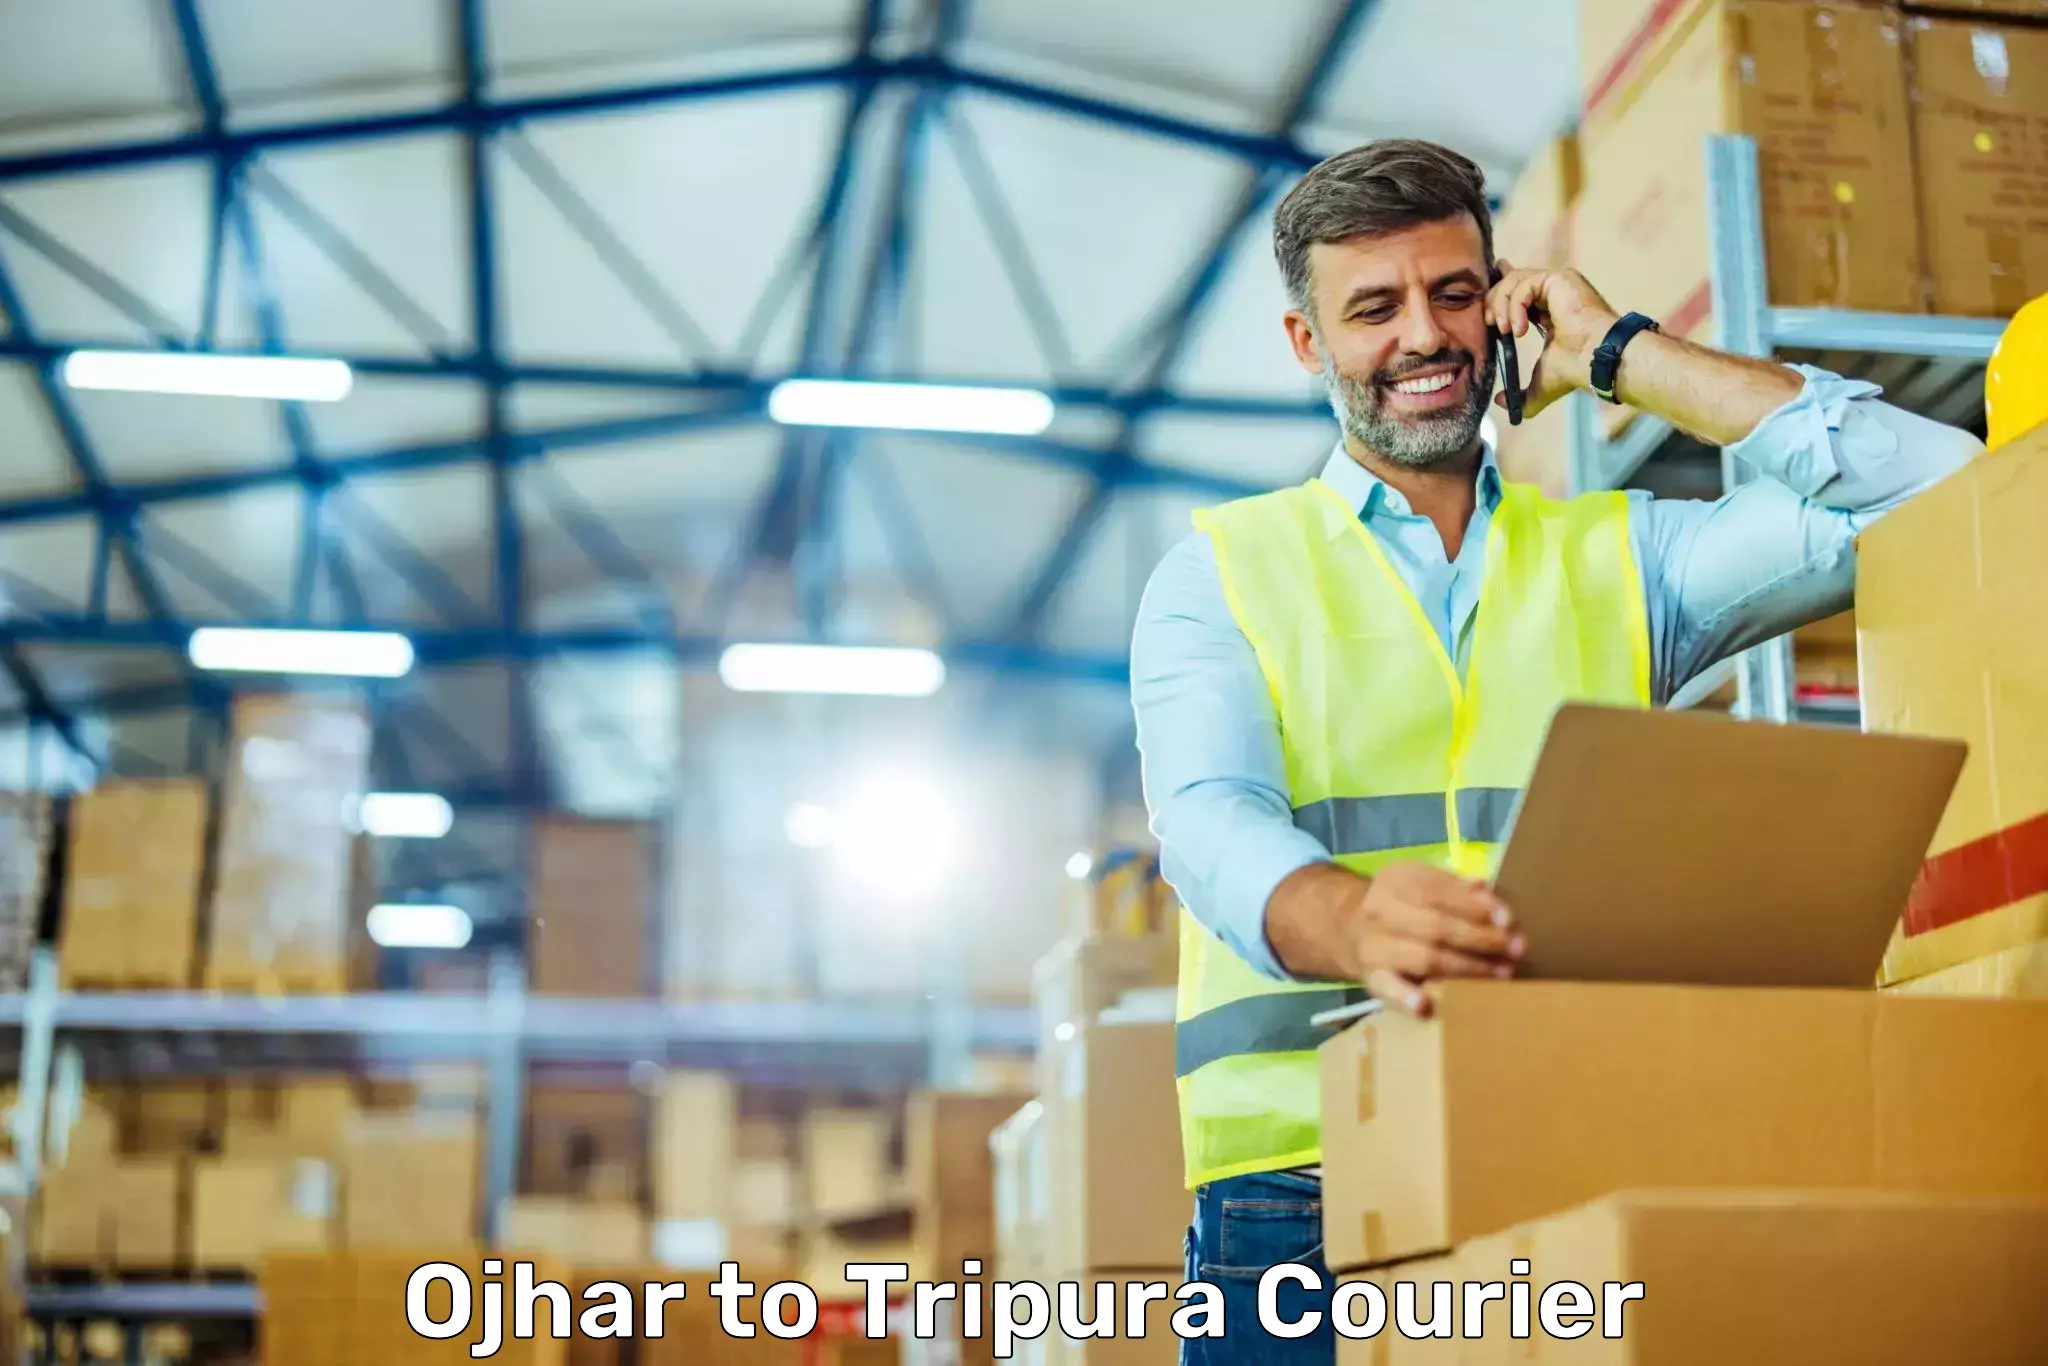 Courier service innovation Ojhar to Tripura